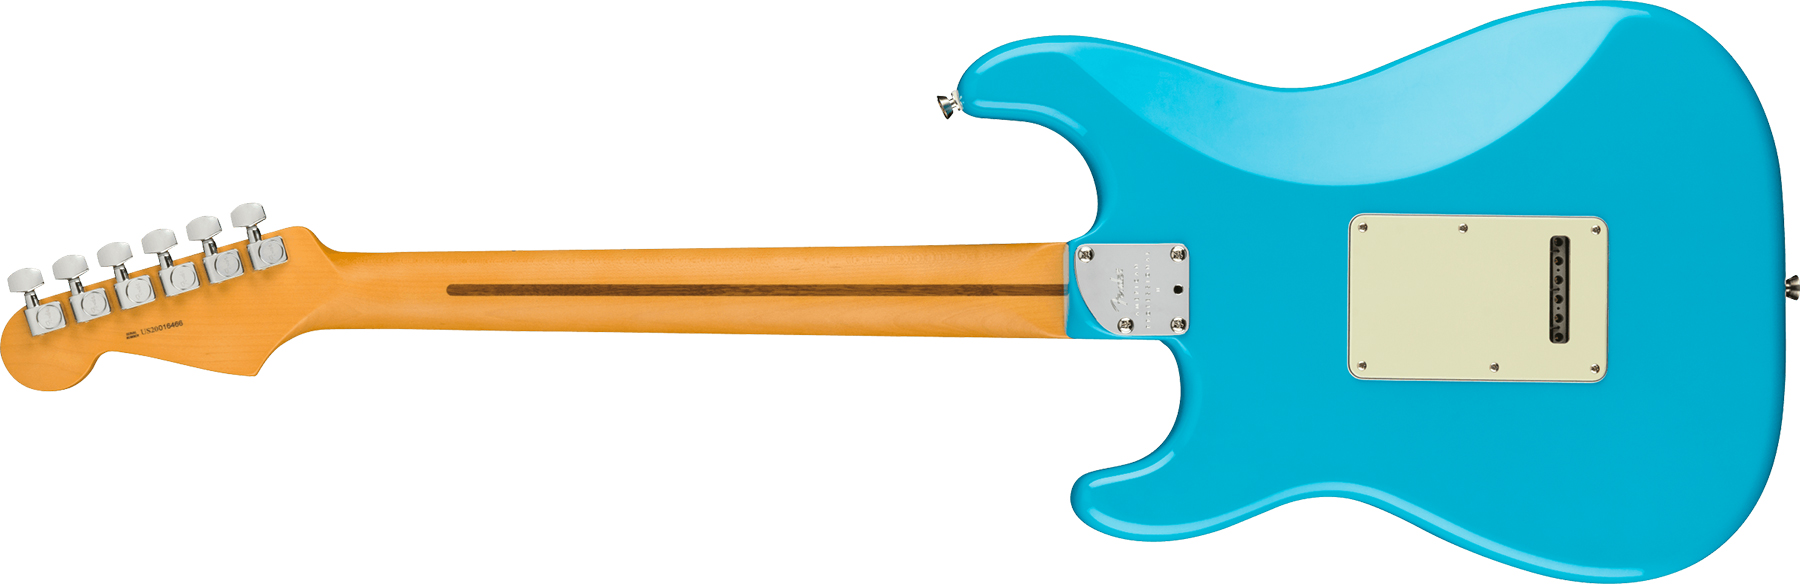 Fender Strat American Professional Ii Usa Mn - Miami Blue - Str shape electric guitar - Variation 1